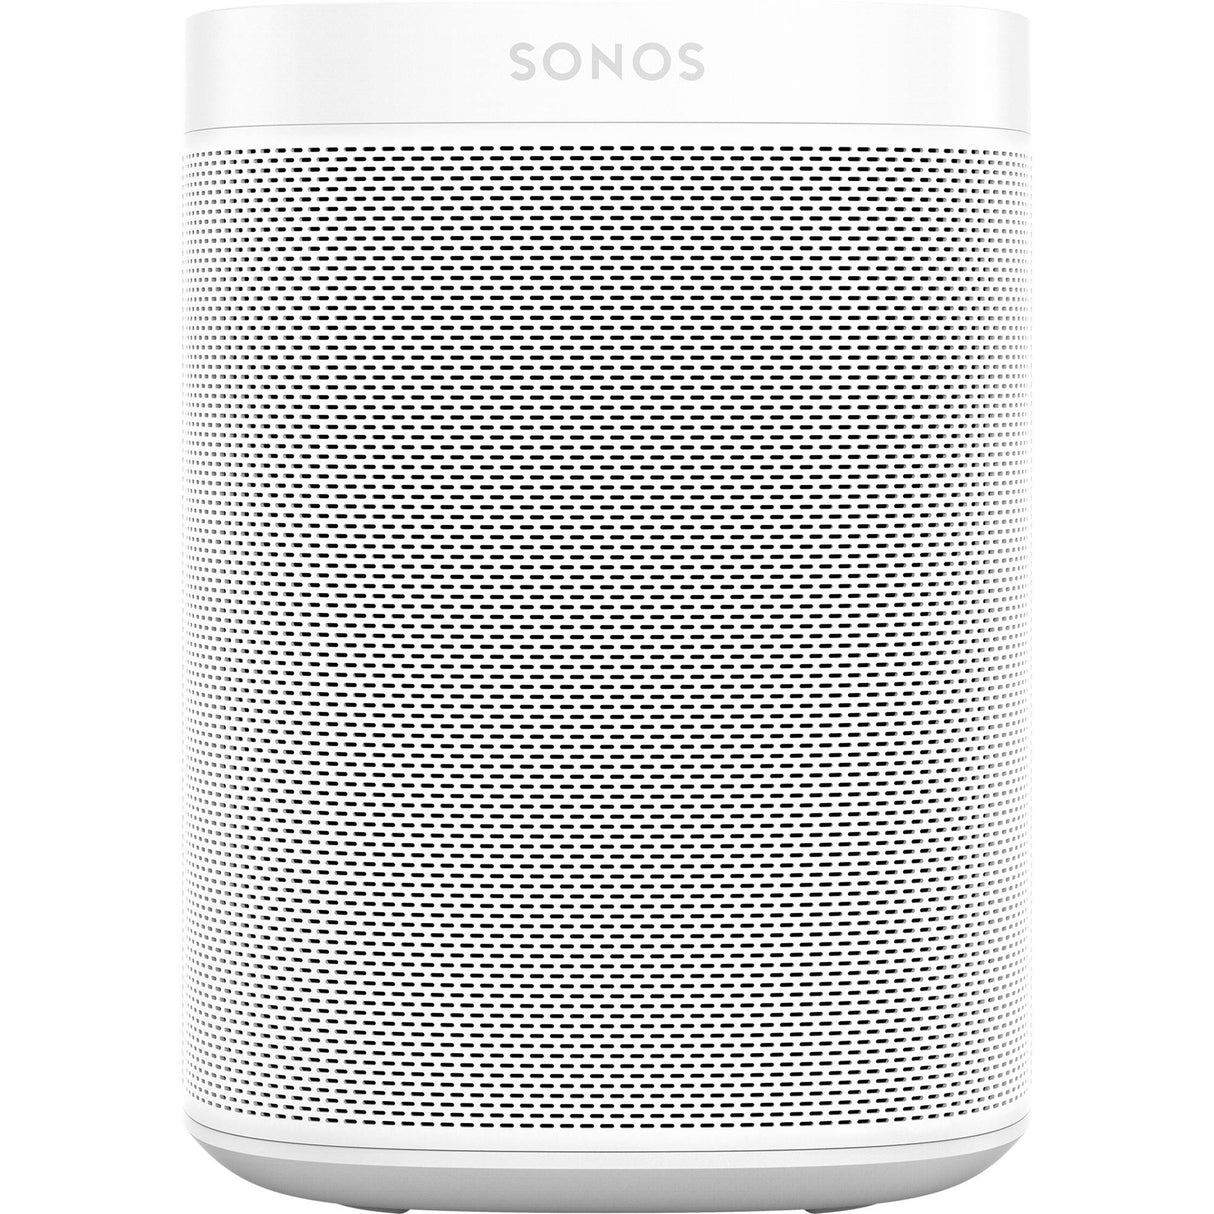 Sonos one generation -2 with amazon Alexa - Wireless speaker (Each)